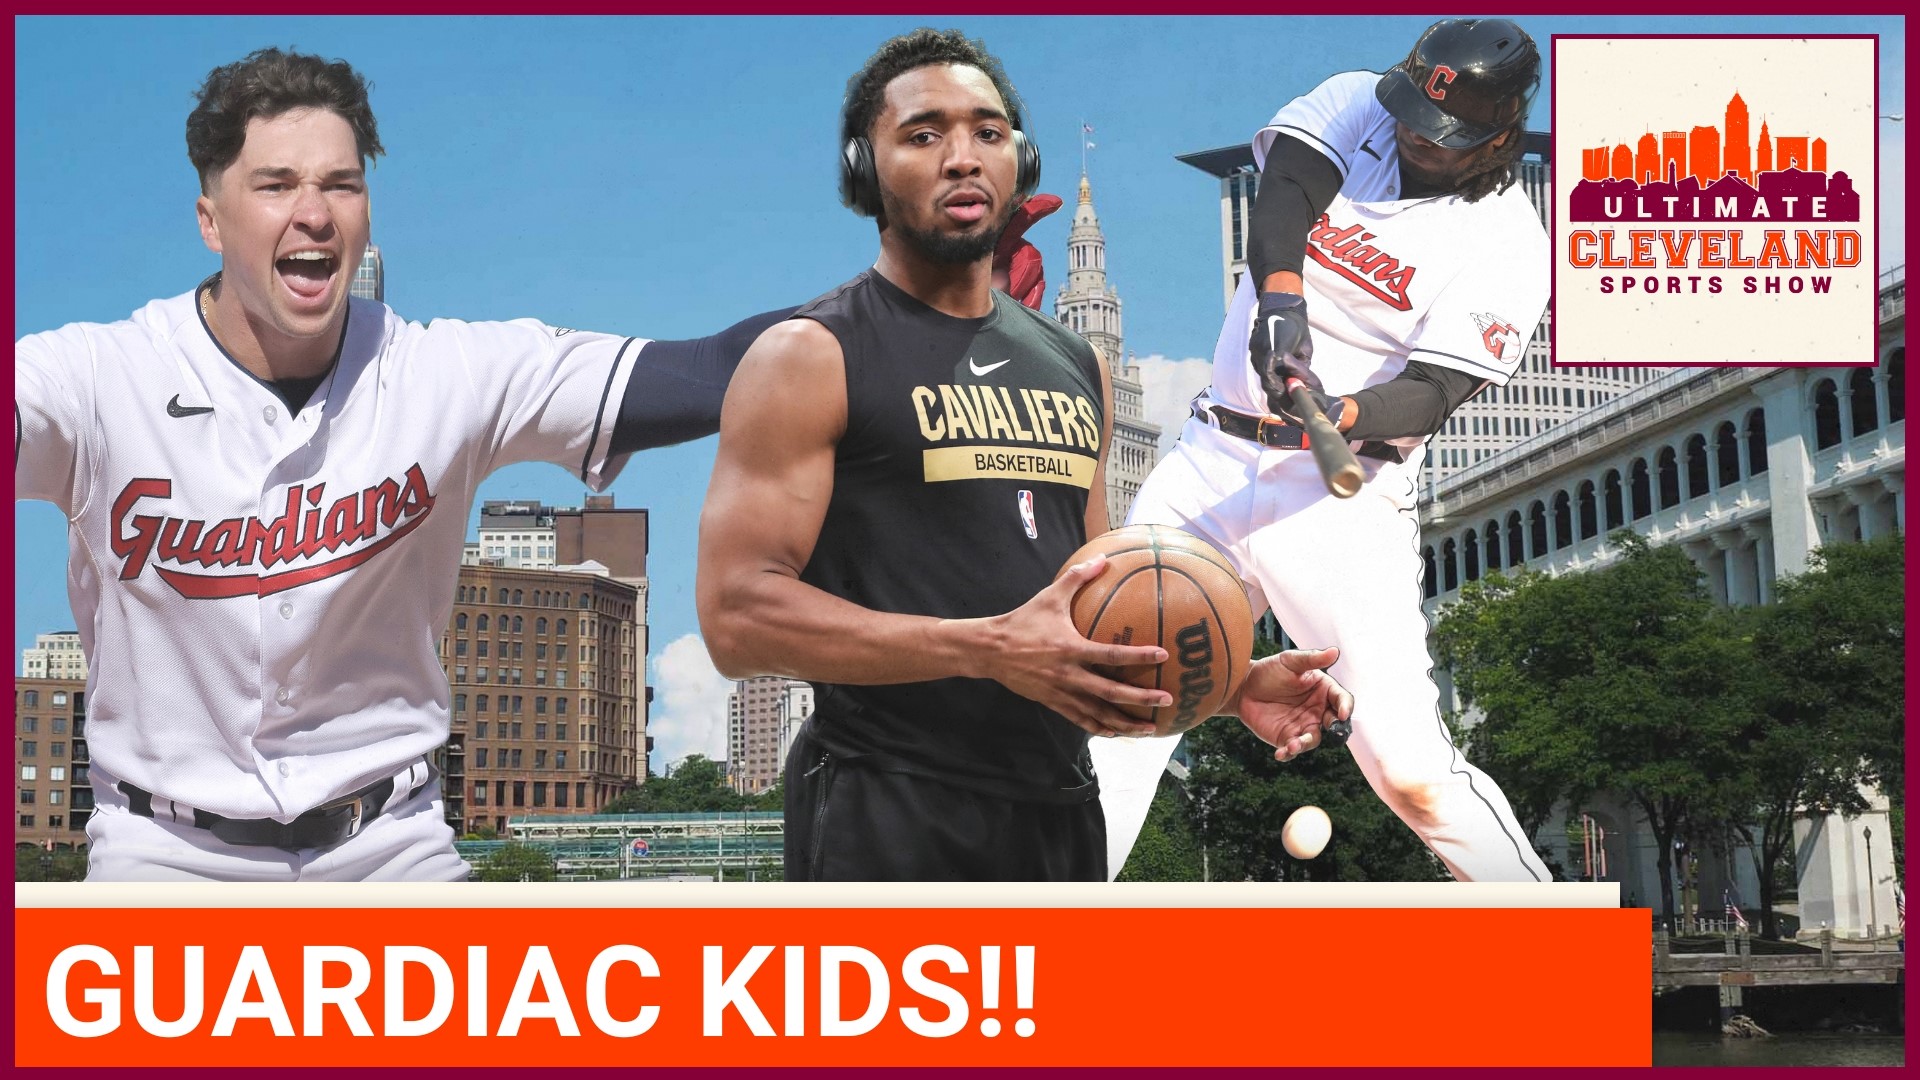 GUARDIAC KIDS: Cleveland Guardians use late inning heroics to